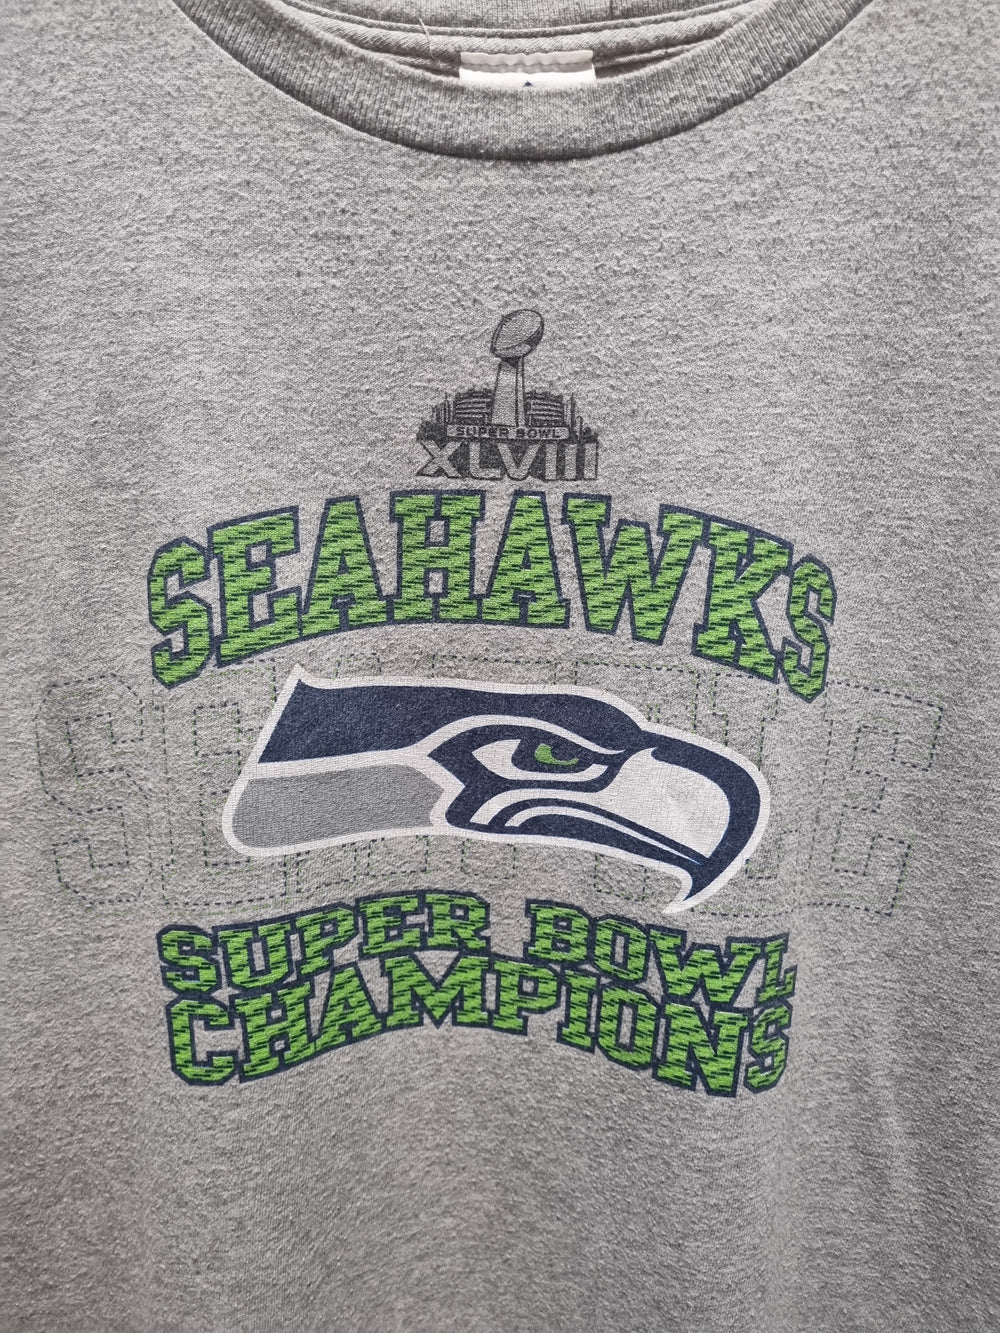 Seattle Seahawks Super Bowl XLVIII XL